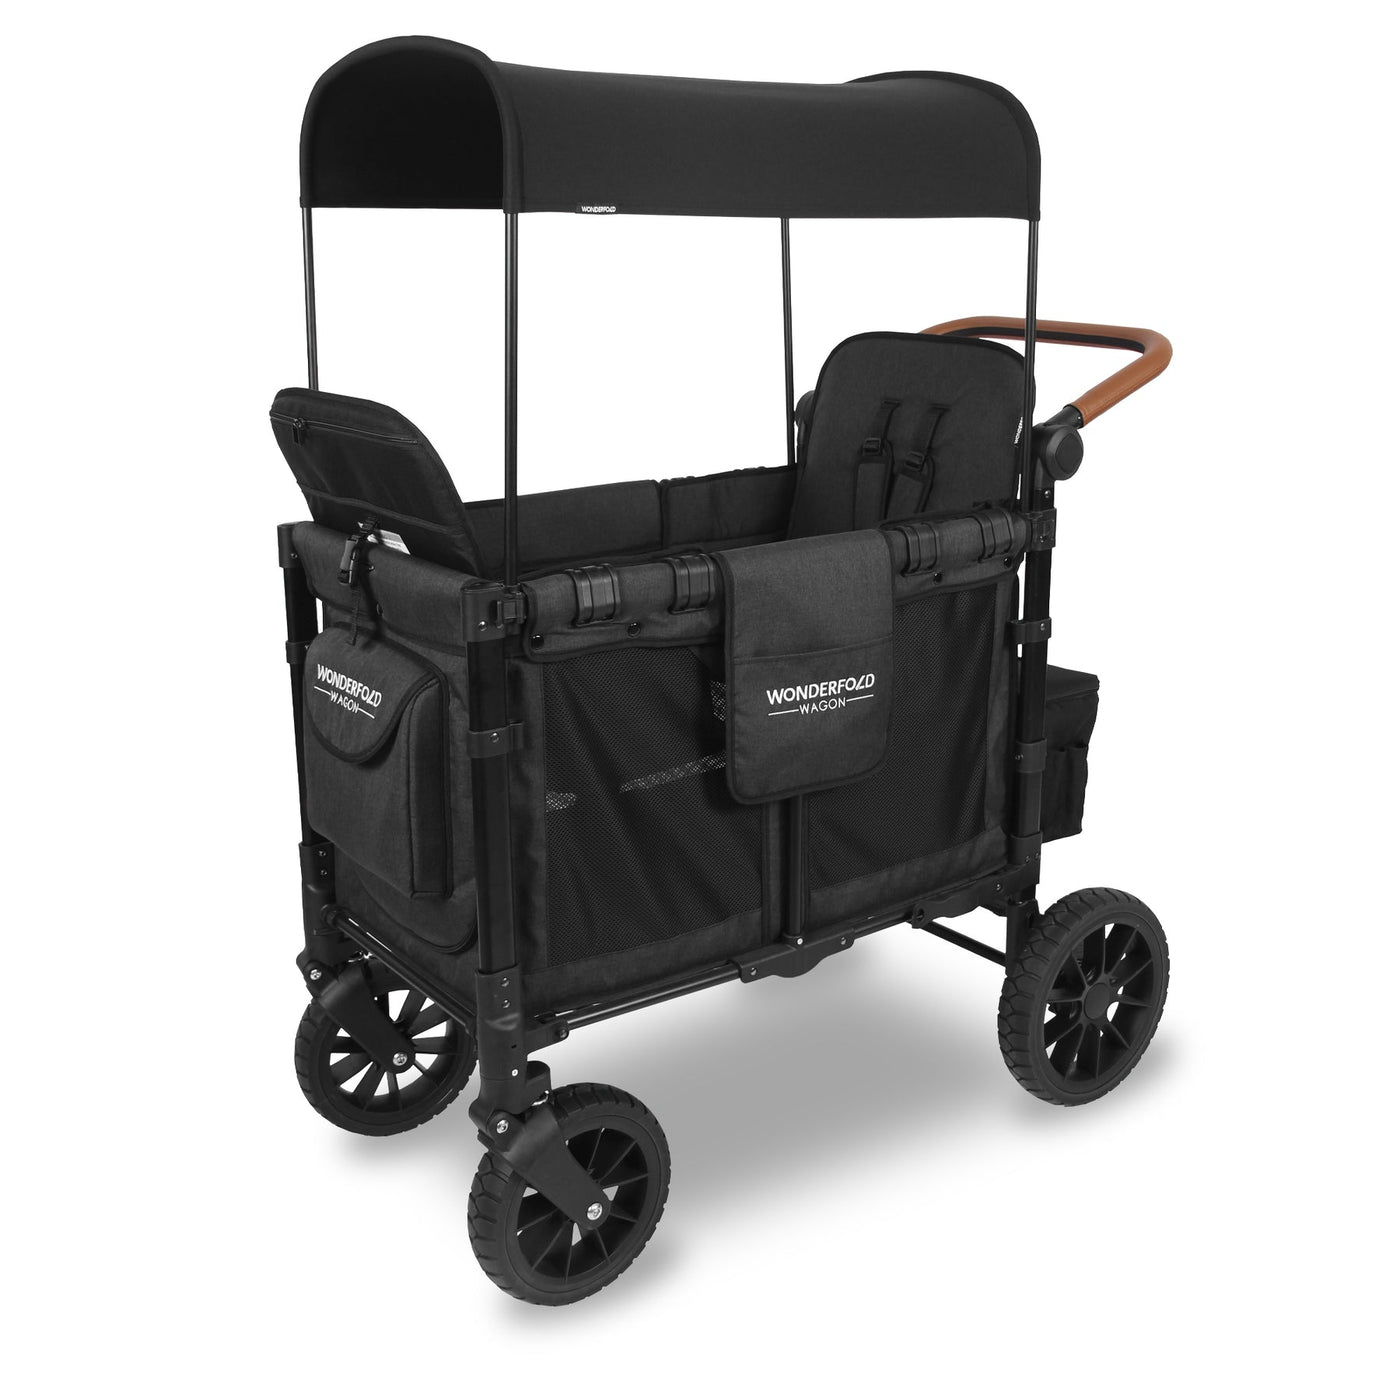 Wonderfold Wagon W2 Luxe Wagon (2 Seater) - Volcanic Black